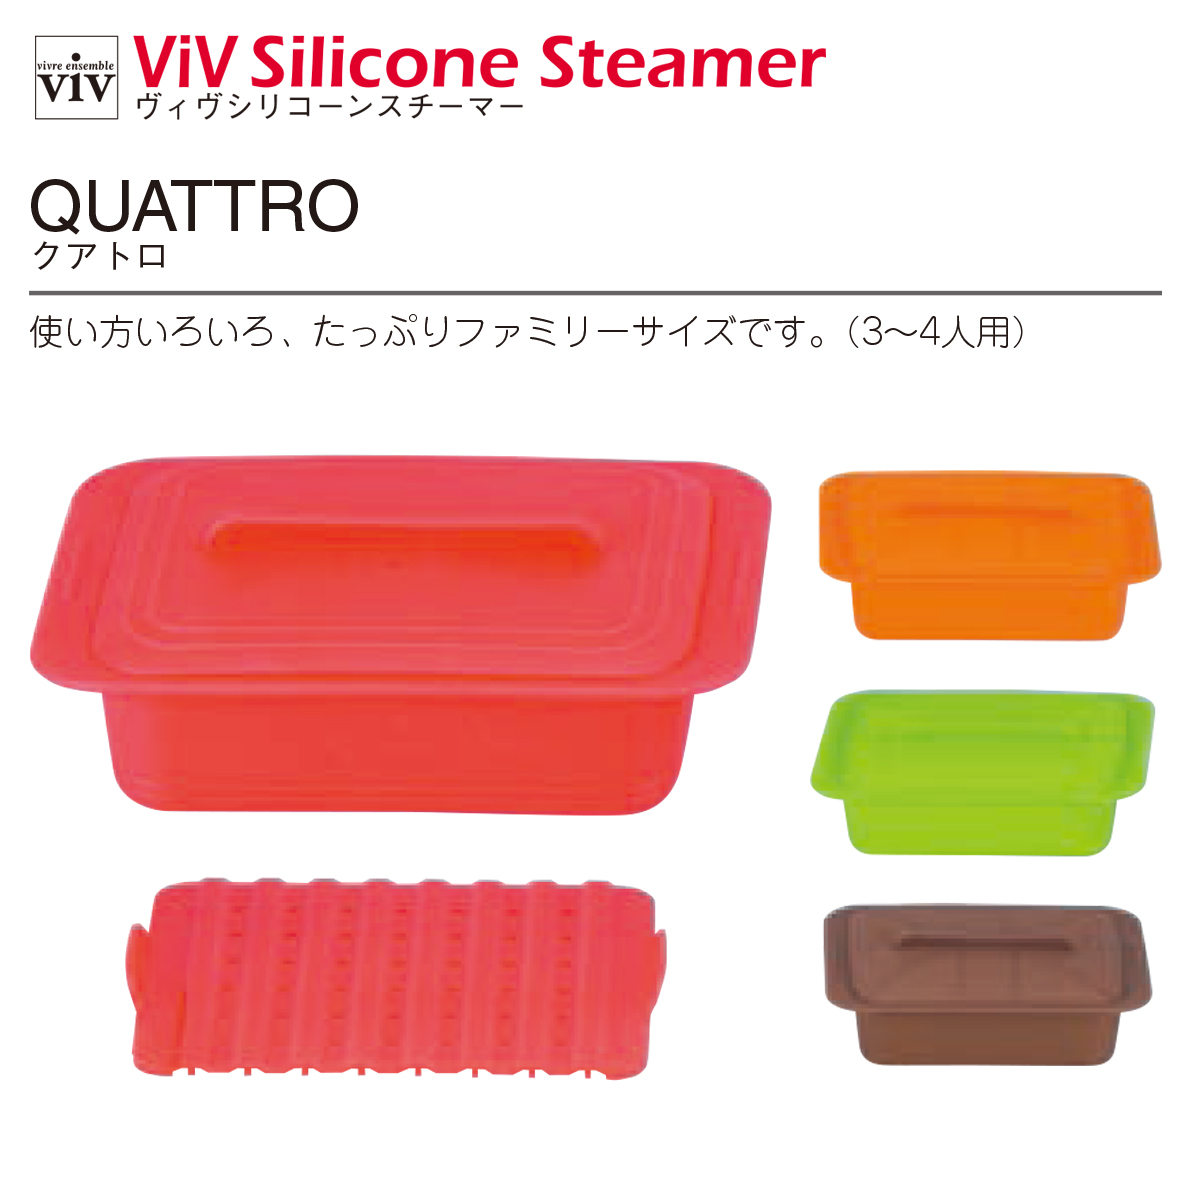 【VIV】ヴィヴ シリコーンスチーマー QUATTRO JAL国際線でも採用 高品質